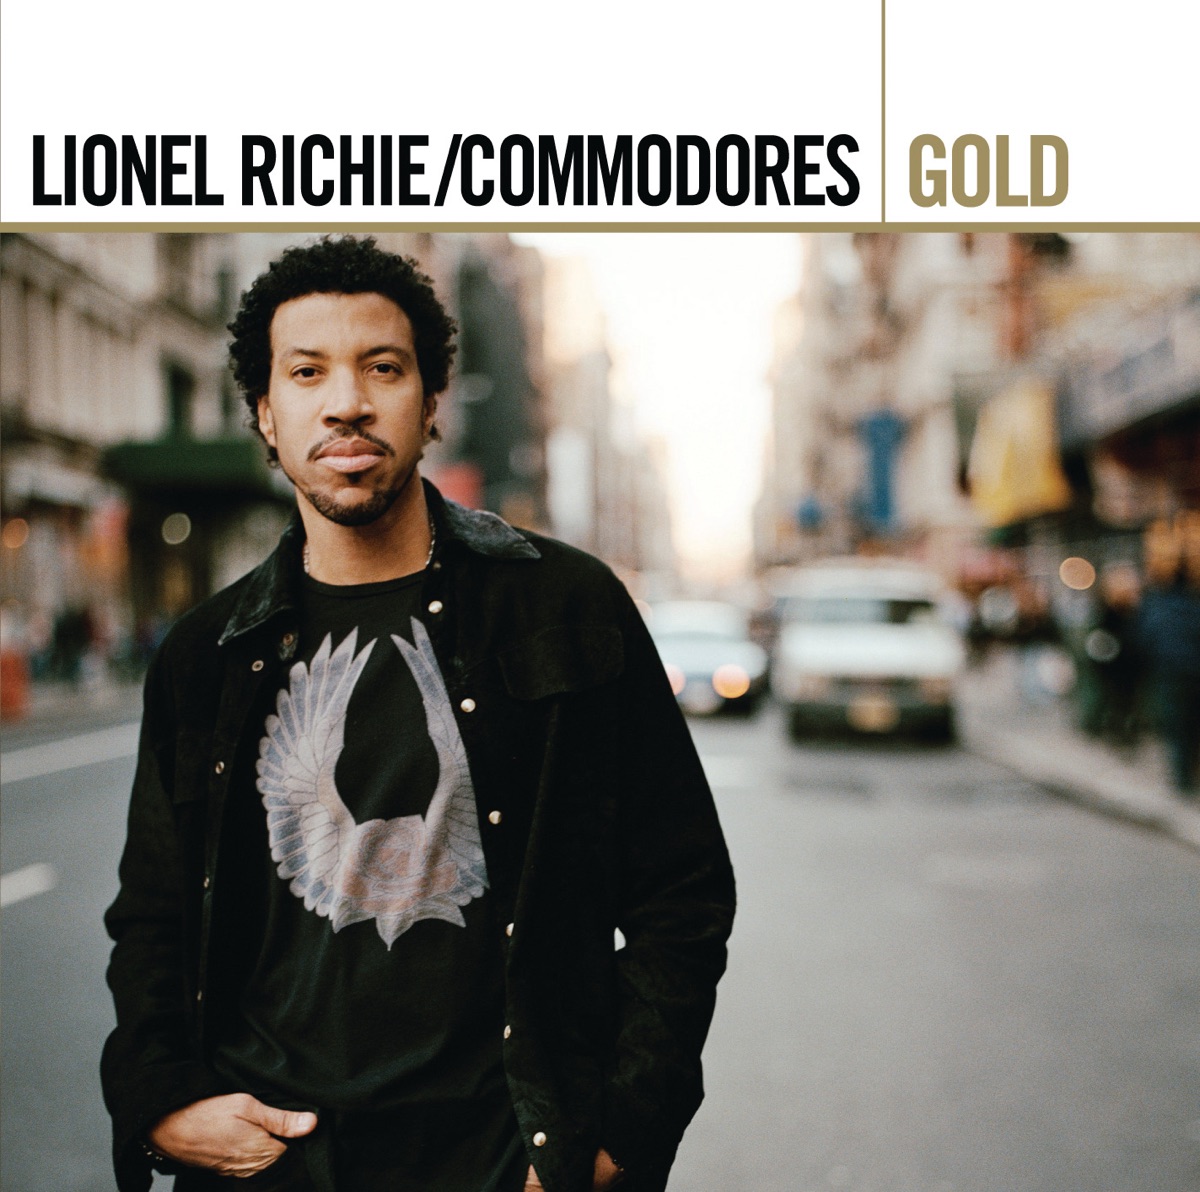 Gold Lionel Richie Commodores Album Cover By Lionel